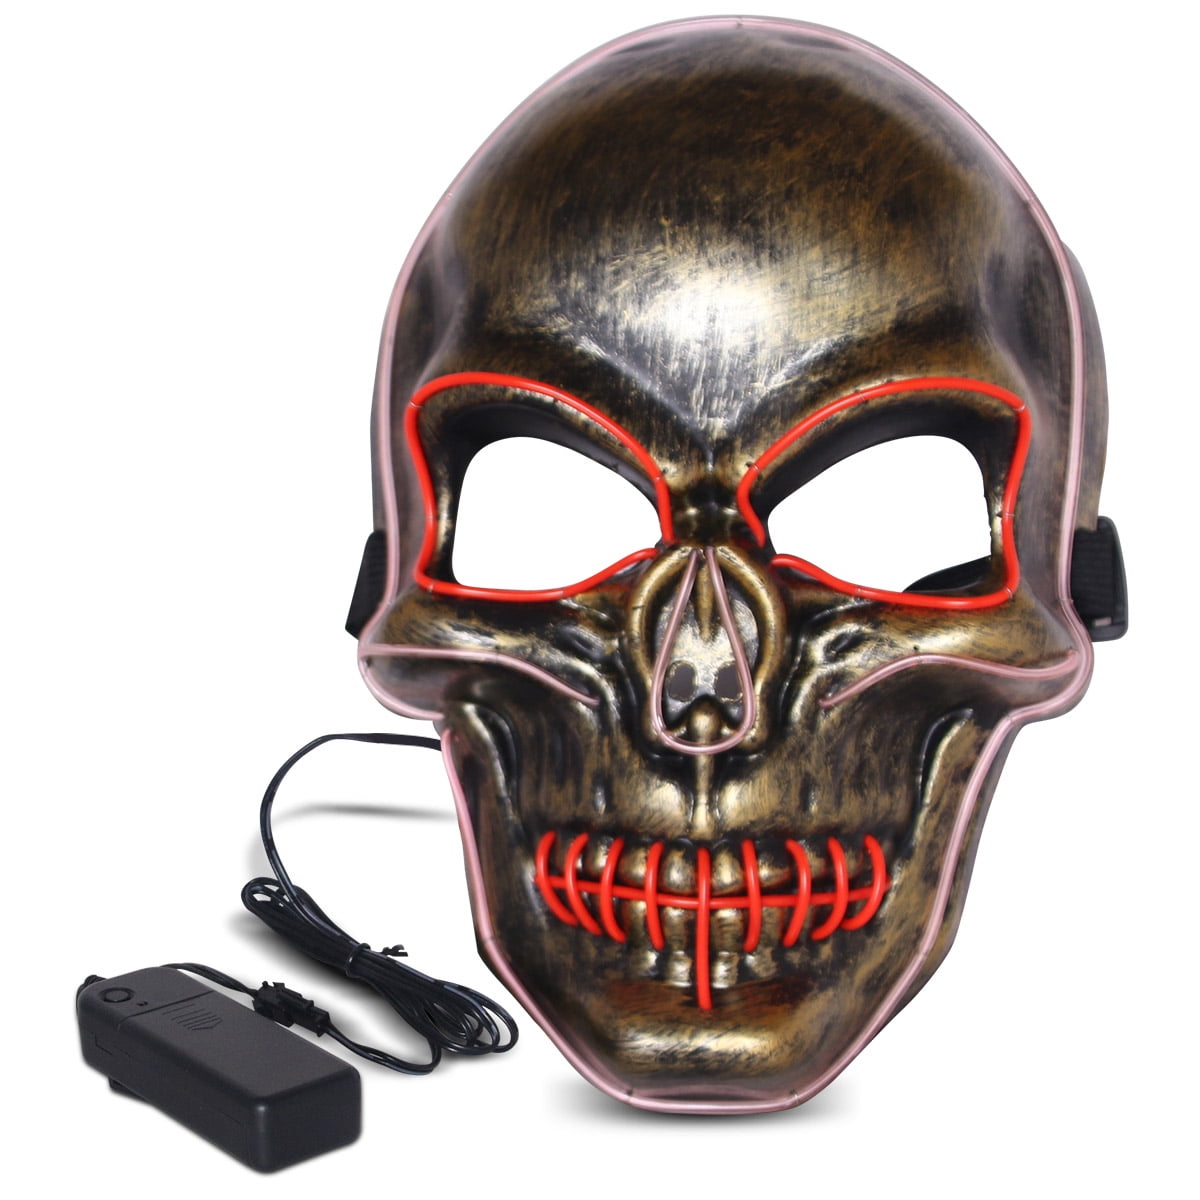 LED Mask Halloween Purge Masks Safe EL Wire/3 Modes Glowing Creepy Mask 